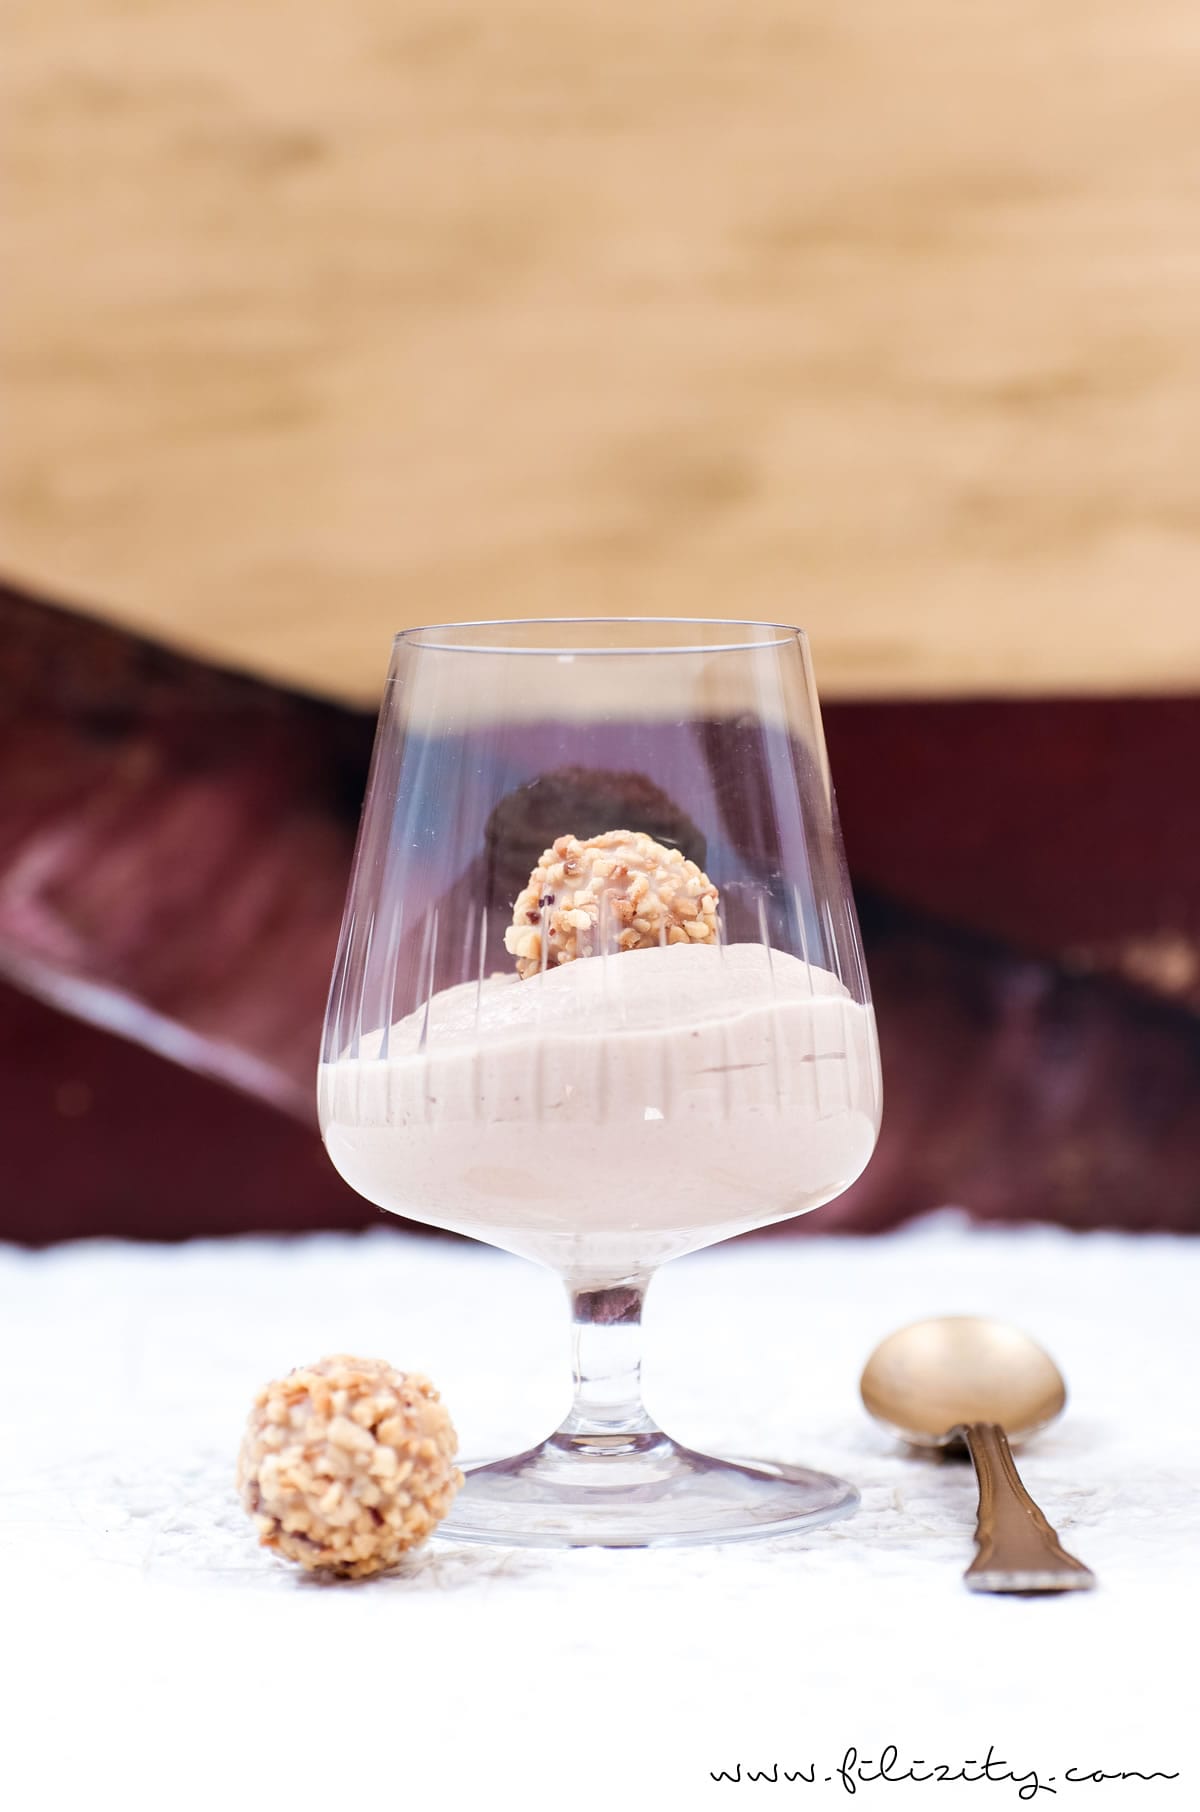 Schnelles Dessert-Rezept: Schoko-Nougat-Mousse mit Quark | Filizity.com | Food-Blog aus dem Rheinland #dessert #nougat